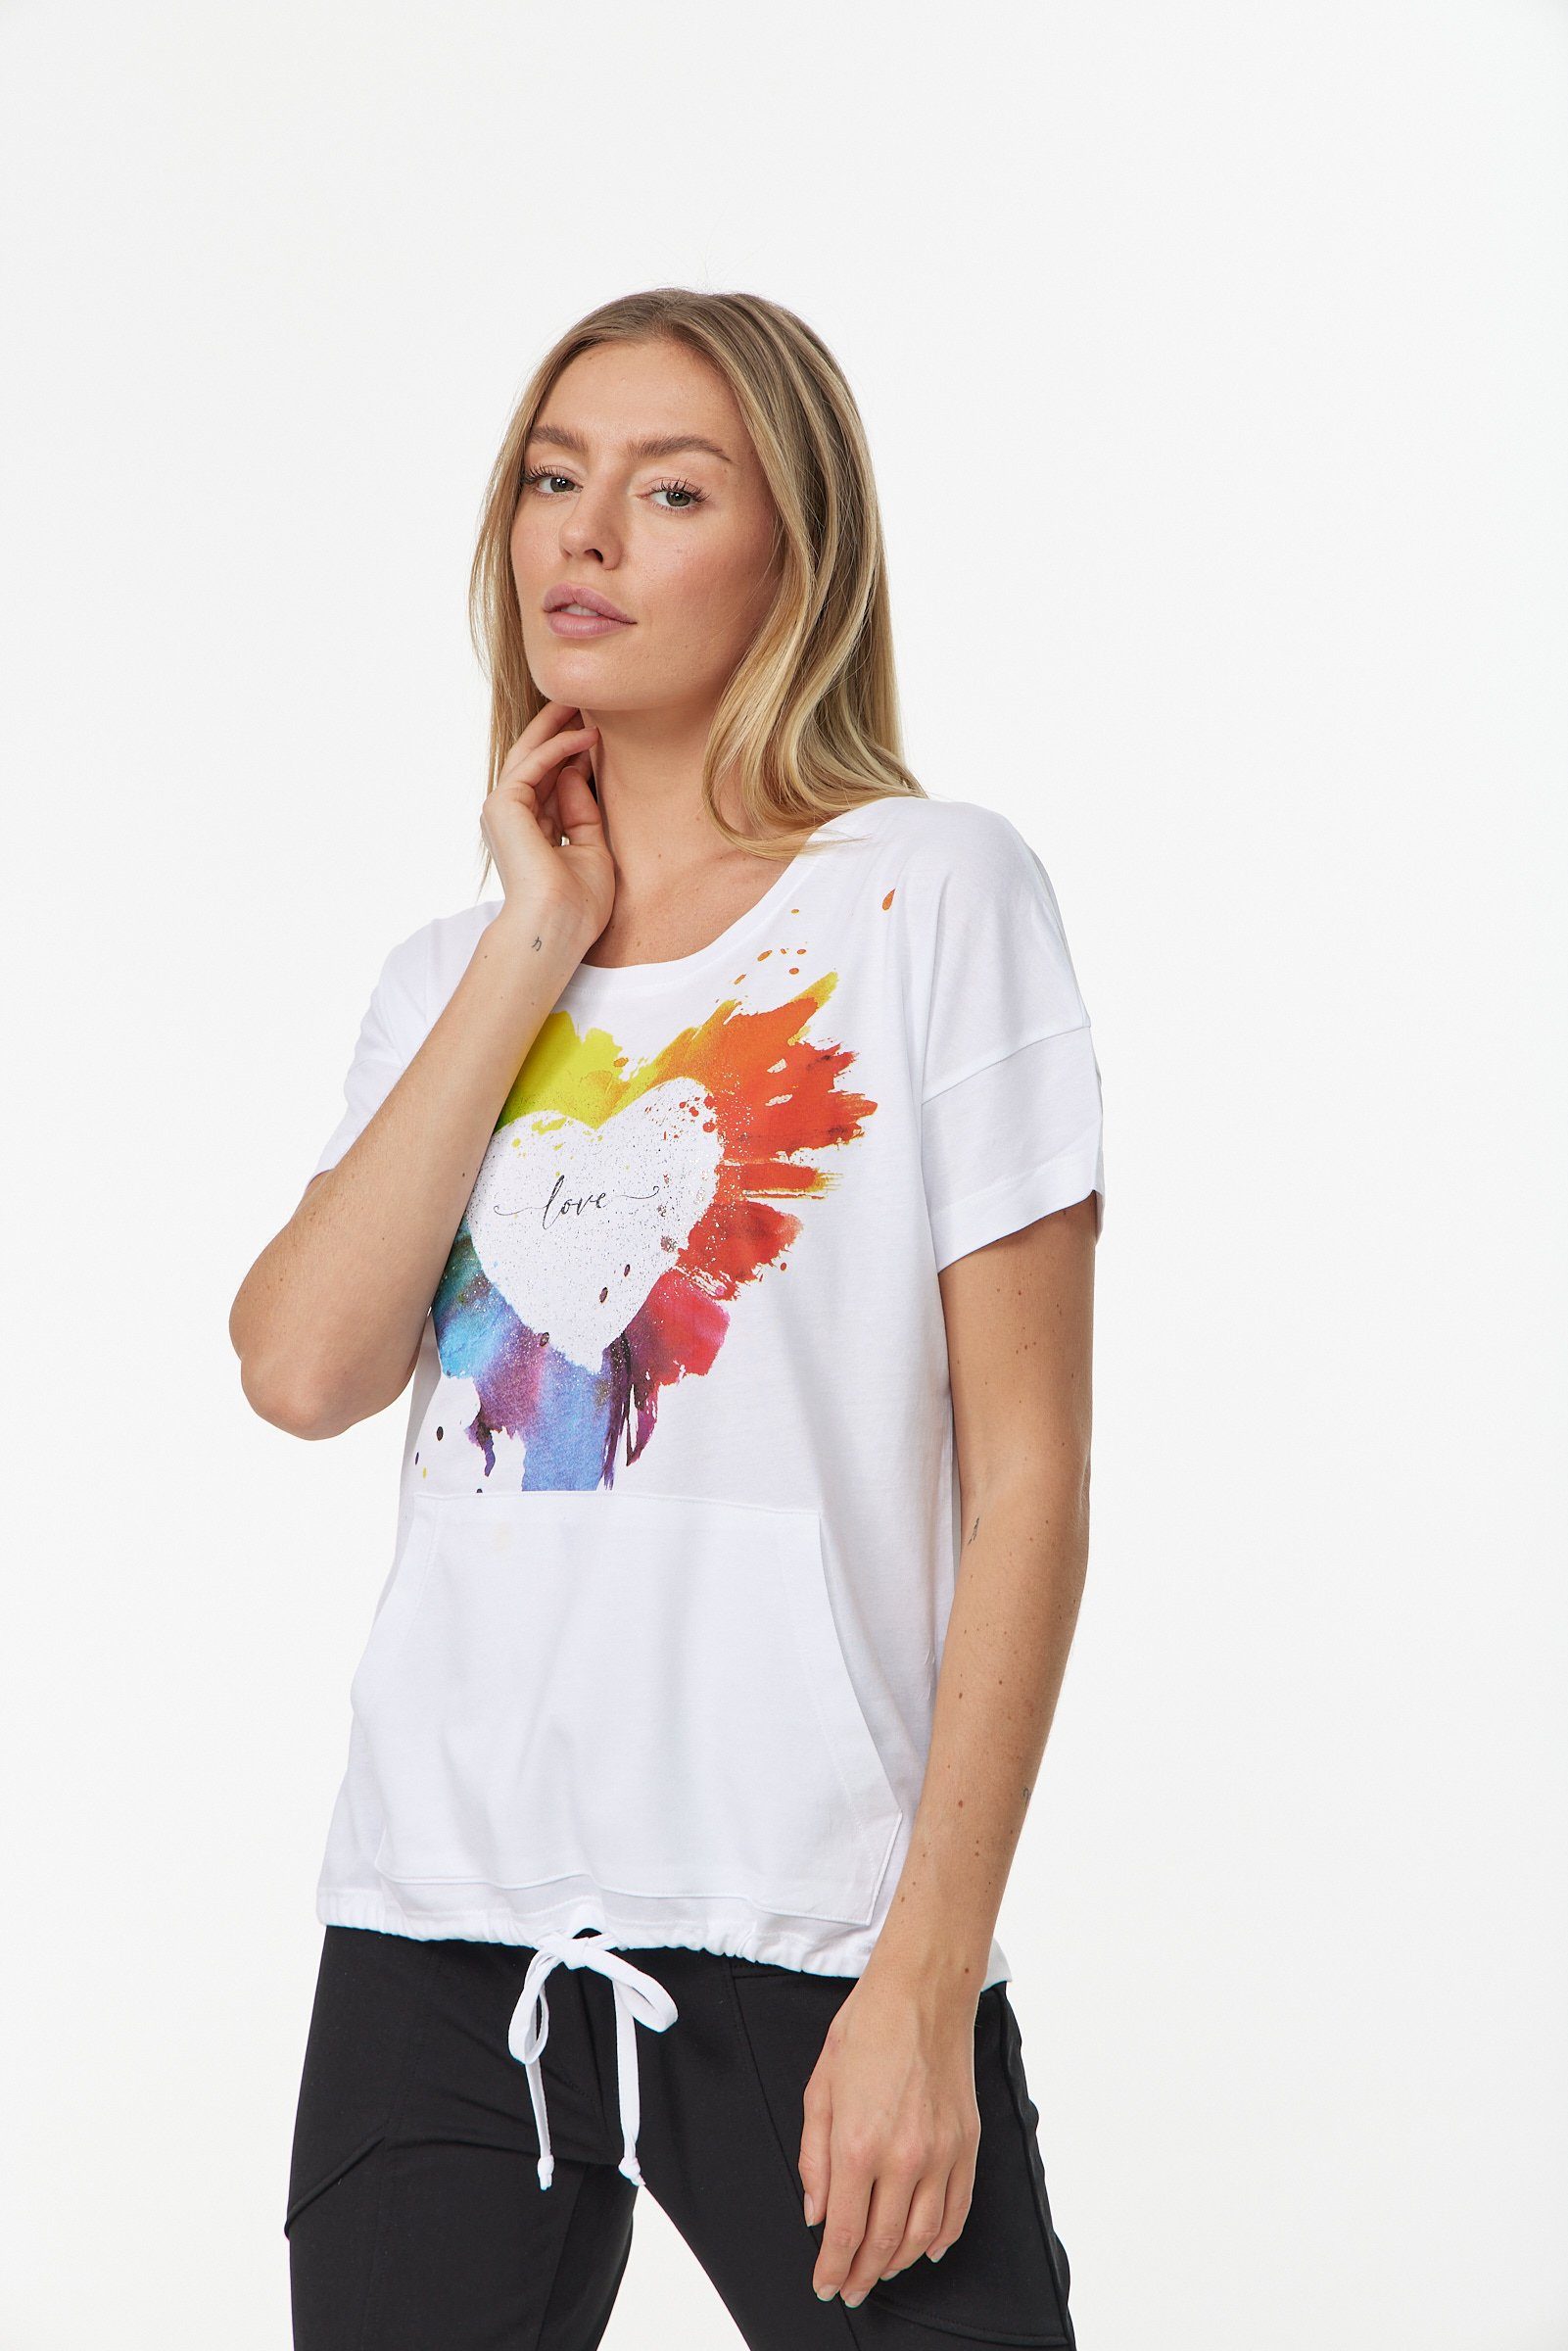 Decay Frontprint farbenfrohem mit T-Shirt